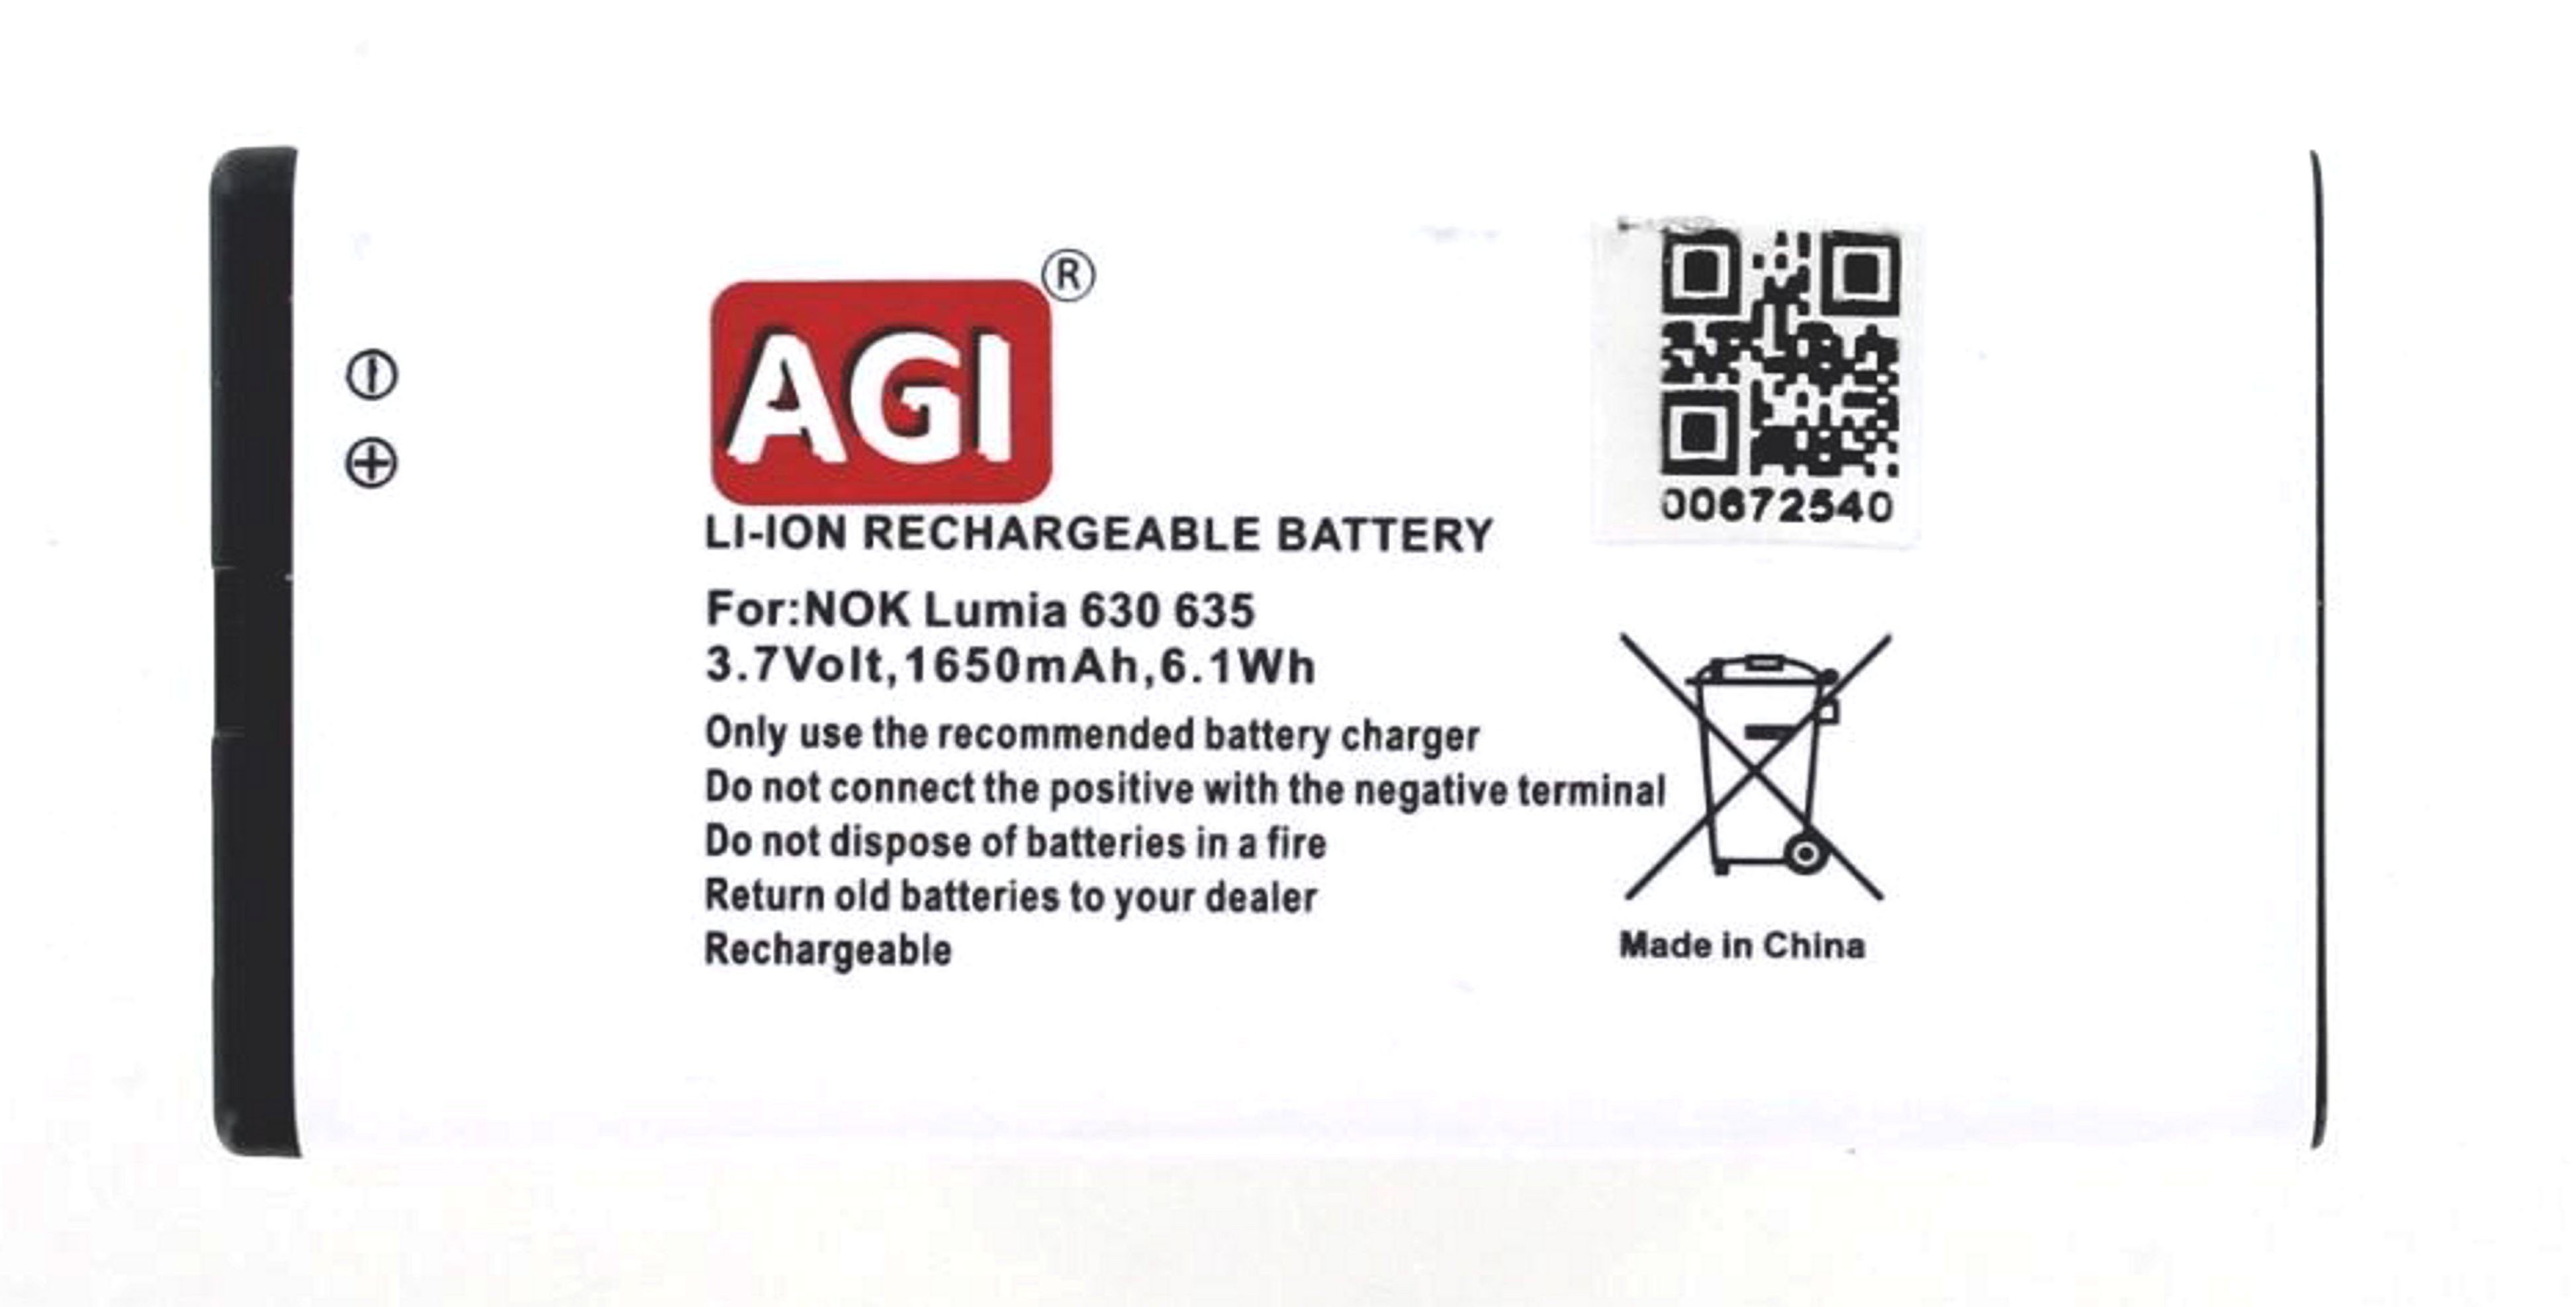 Nokia kompatibel Akku AGI Akku mit Akku BL-5H